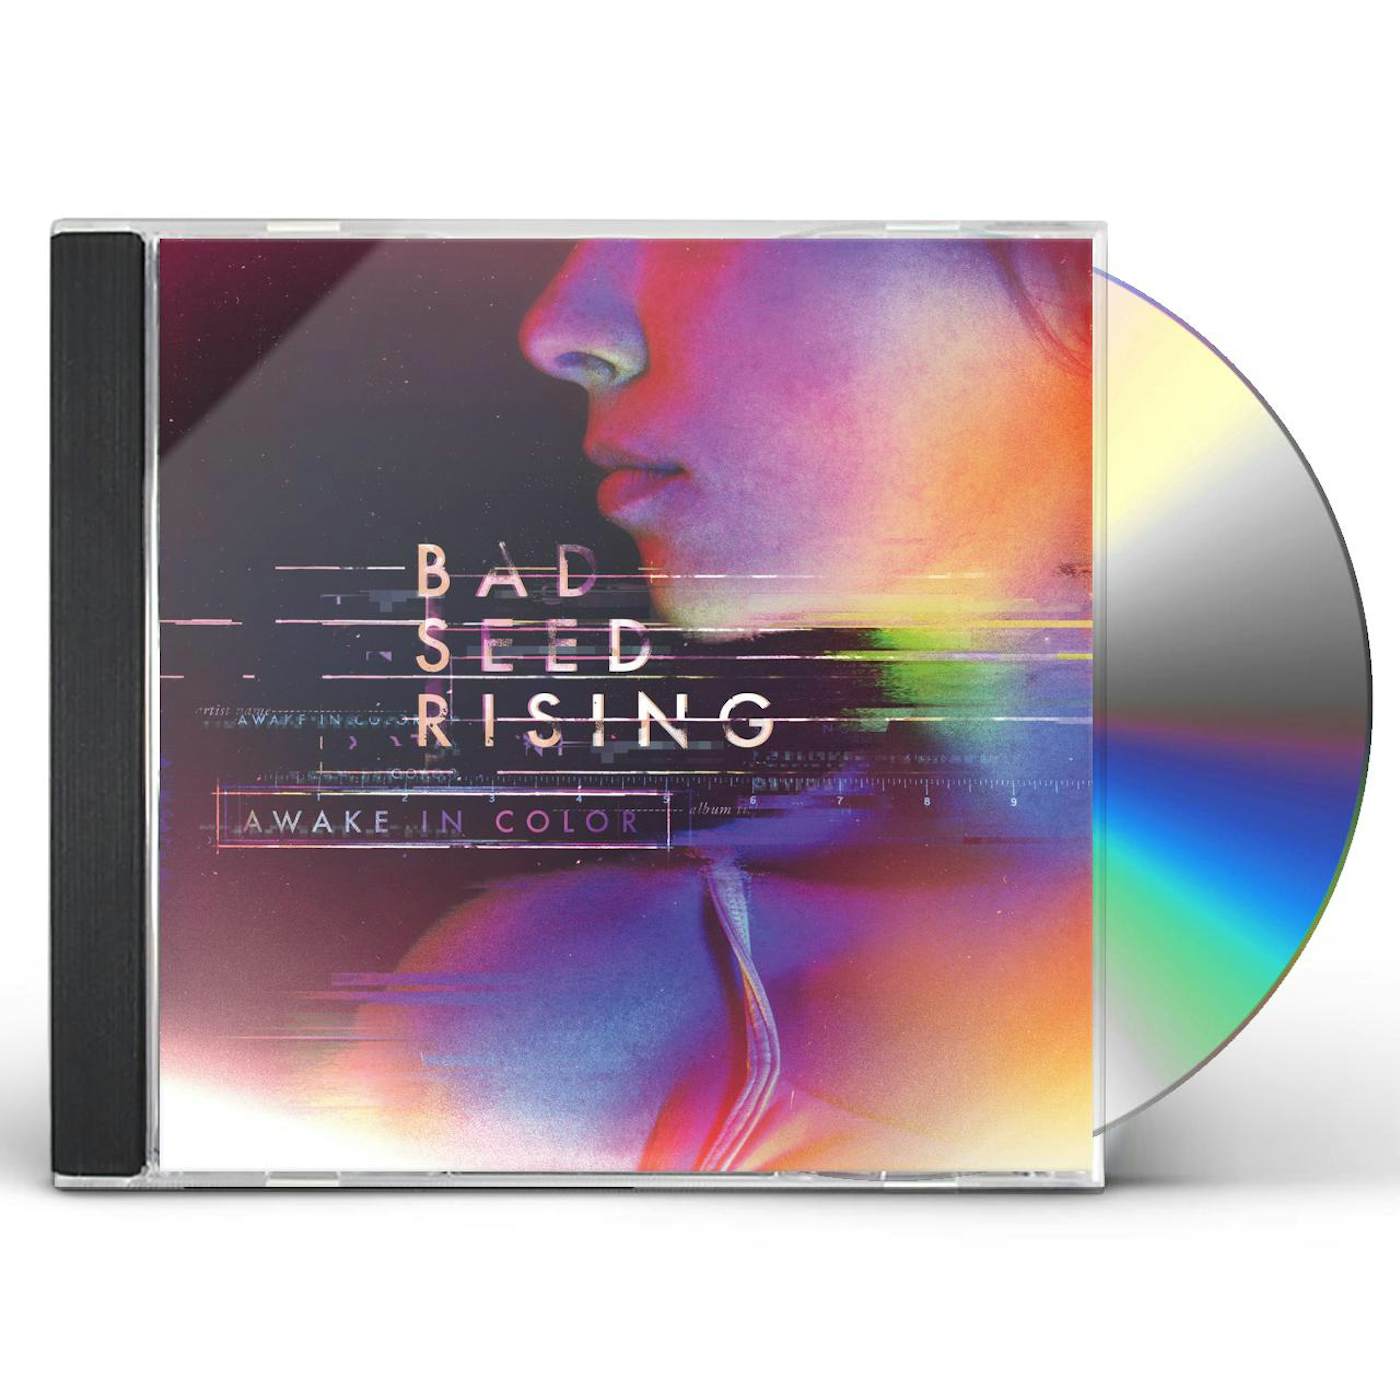 Bad Seed Rising AWAKE IN COLOR CD